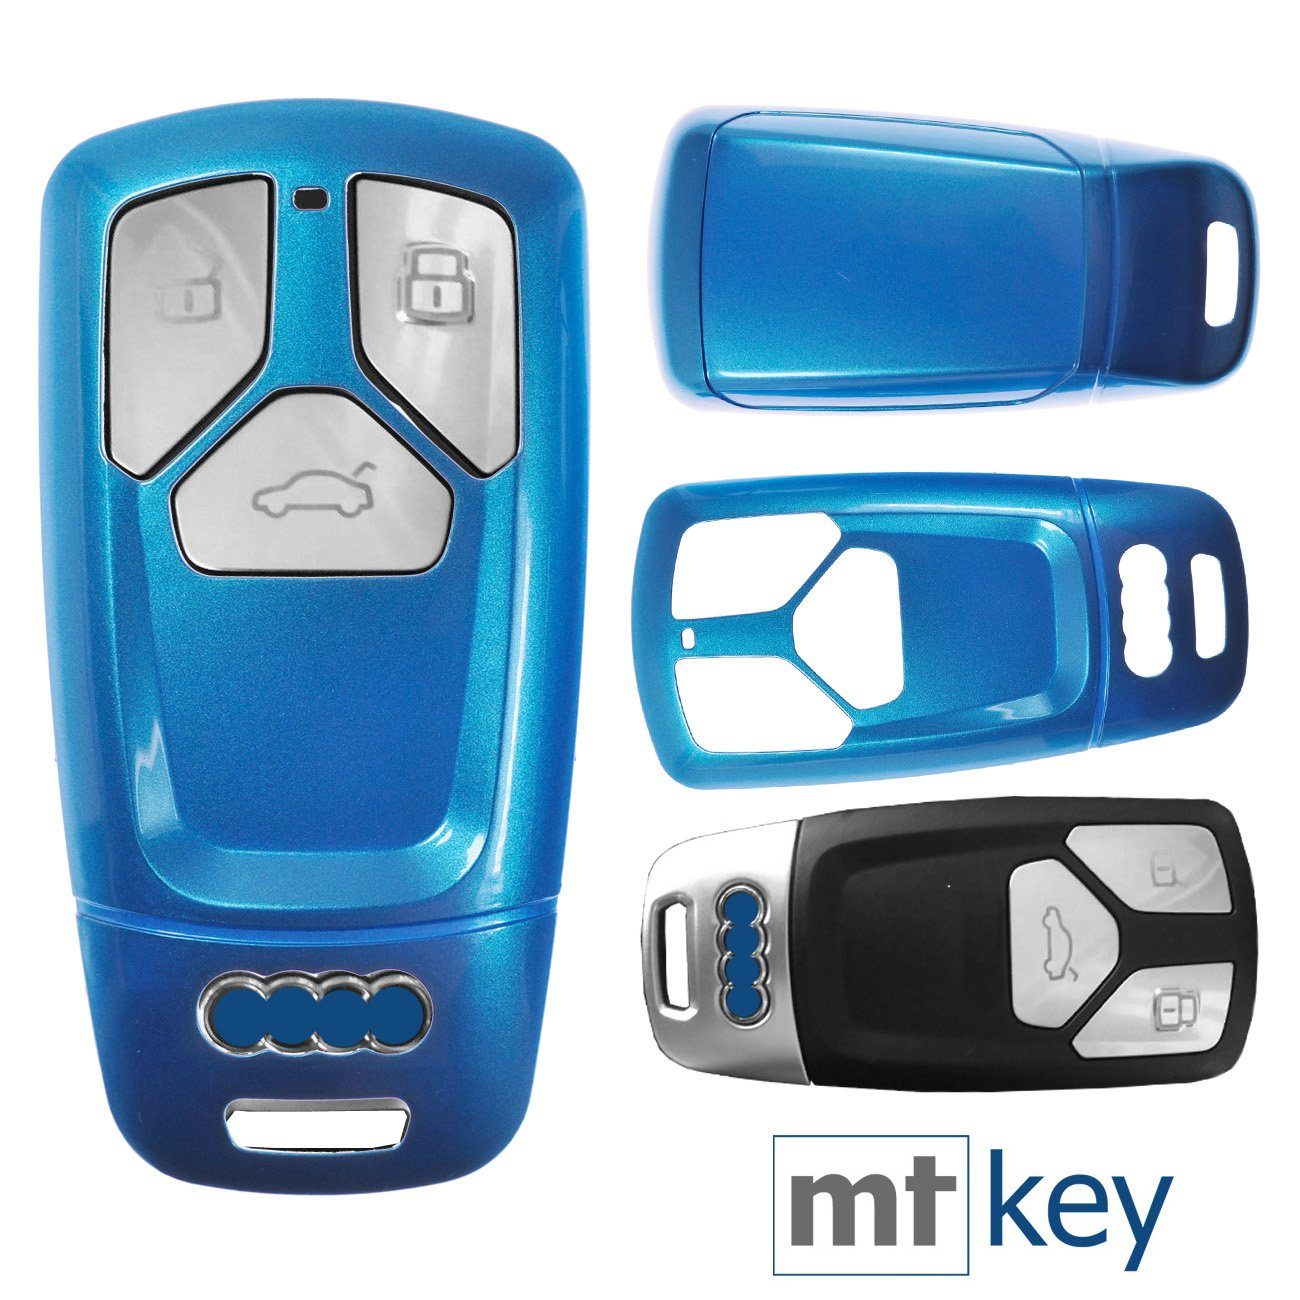 mt-key Schlüsseltasche Autoschlüssel Hardcover Schutzhülle Metallic Blue, für Audi A4 A5 A6 A7 TT Q2 Q5 Q7 A8 Q8 KEYLESS SMARTKEY Metallic Blau | Schlüsseltaschen